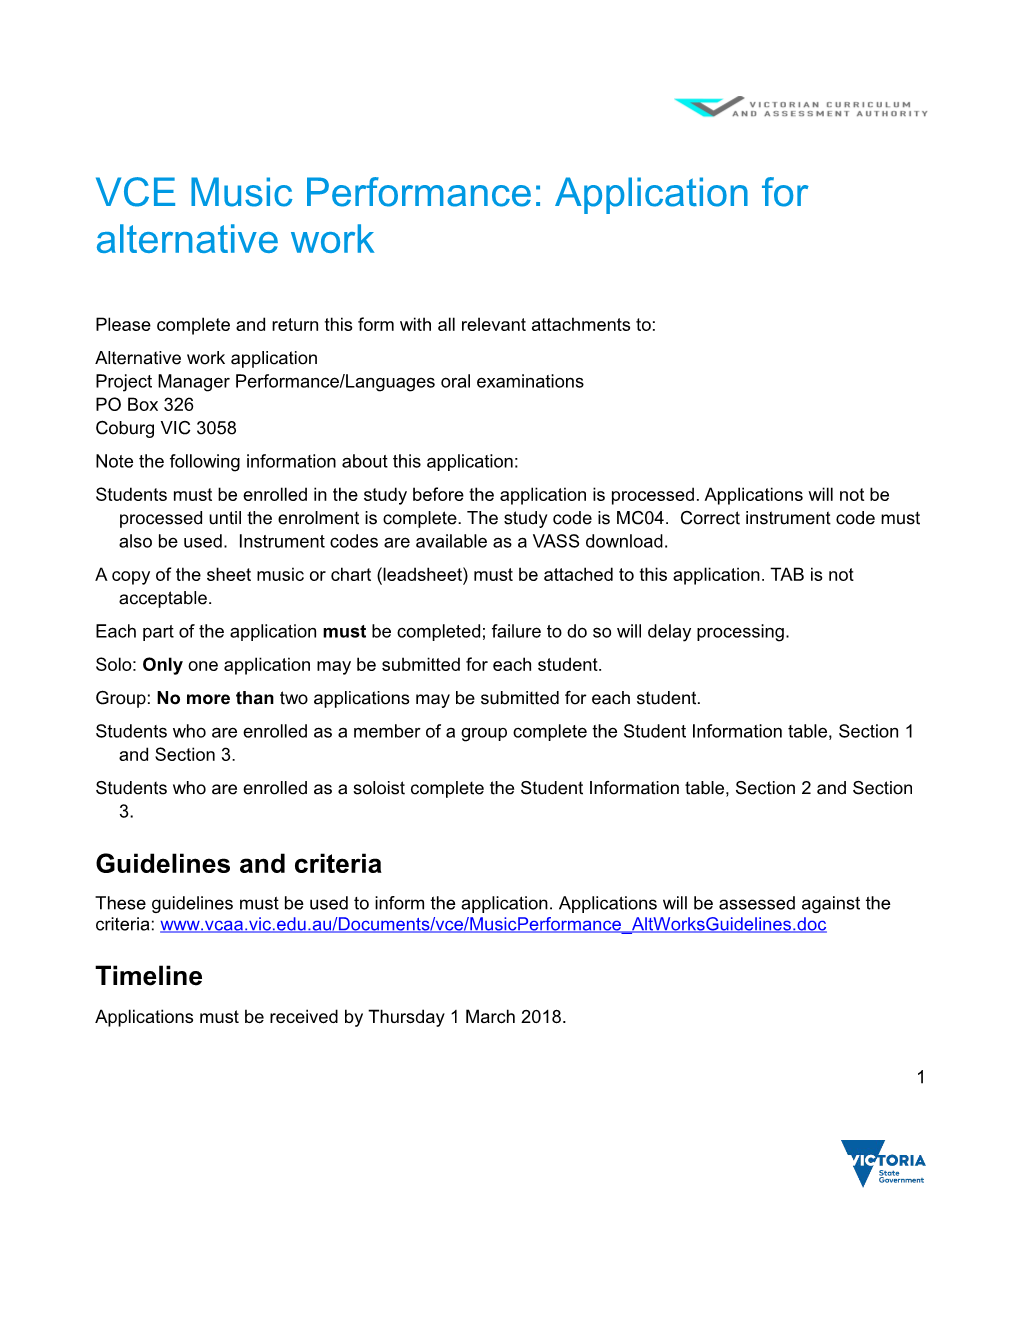 VCE Music Performance: Application for Alternative Work